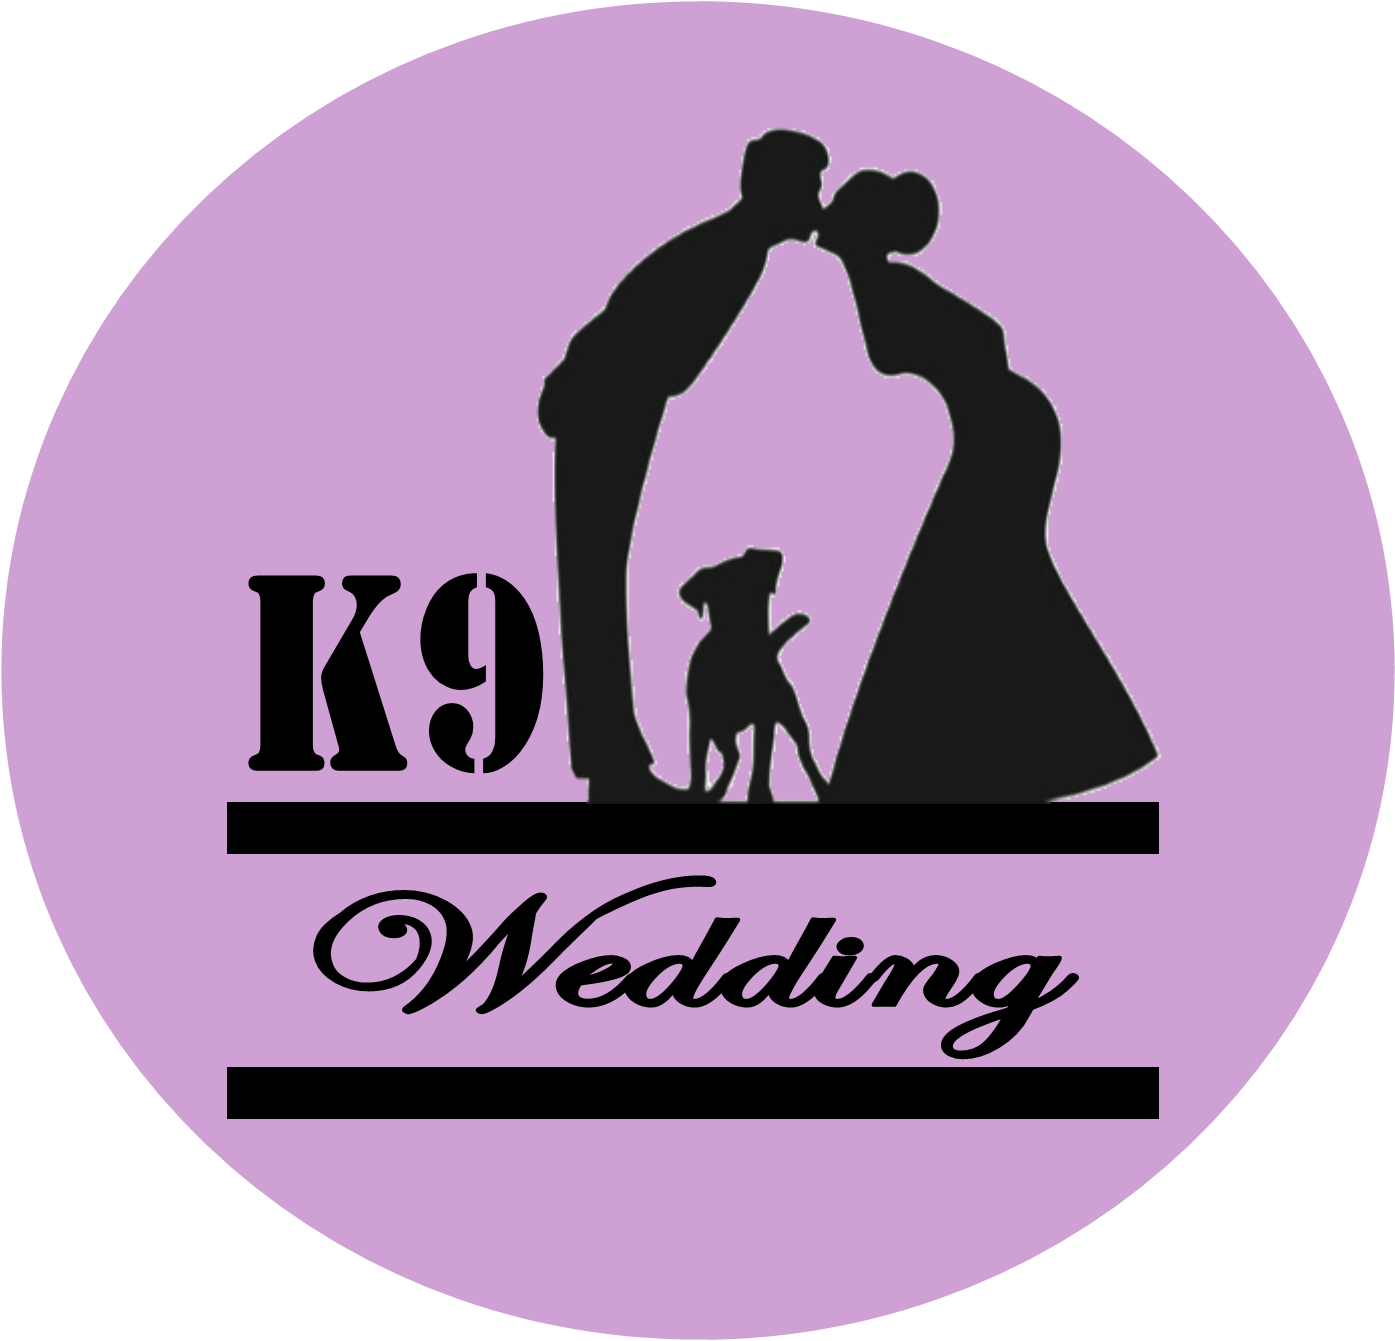 K9 Wedding